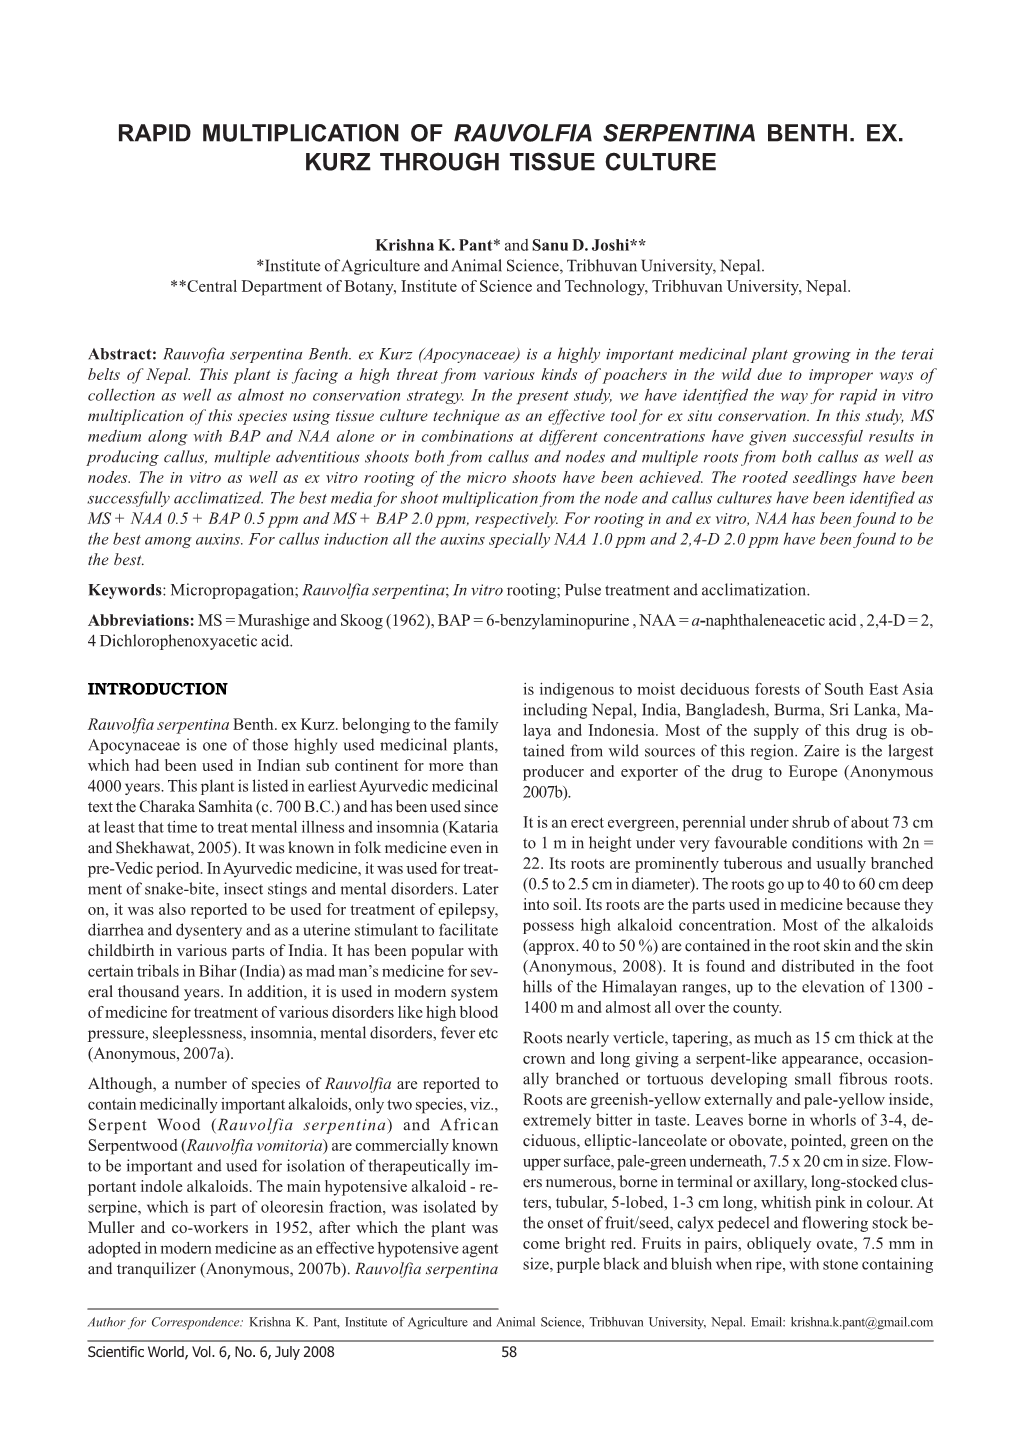 Scientific World-Vol6-FINAL for PDF.Pmd